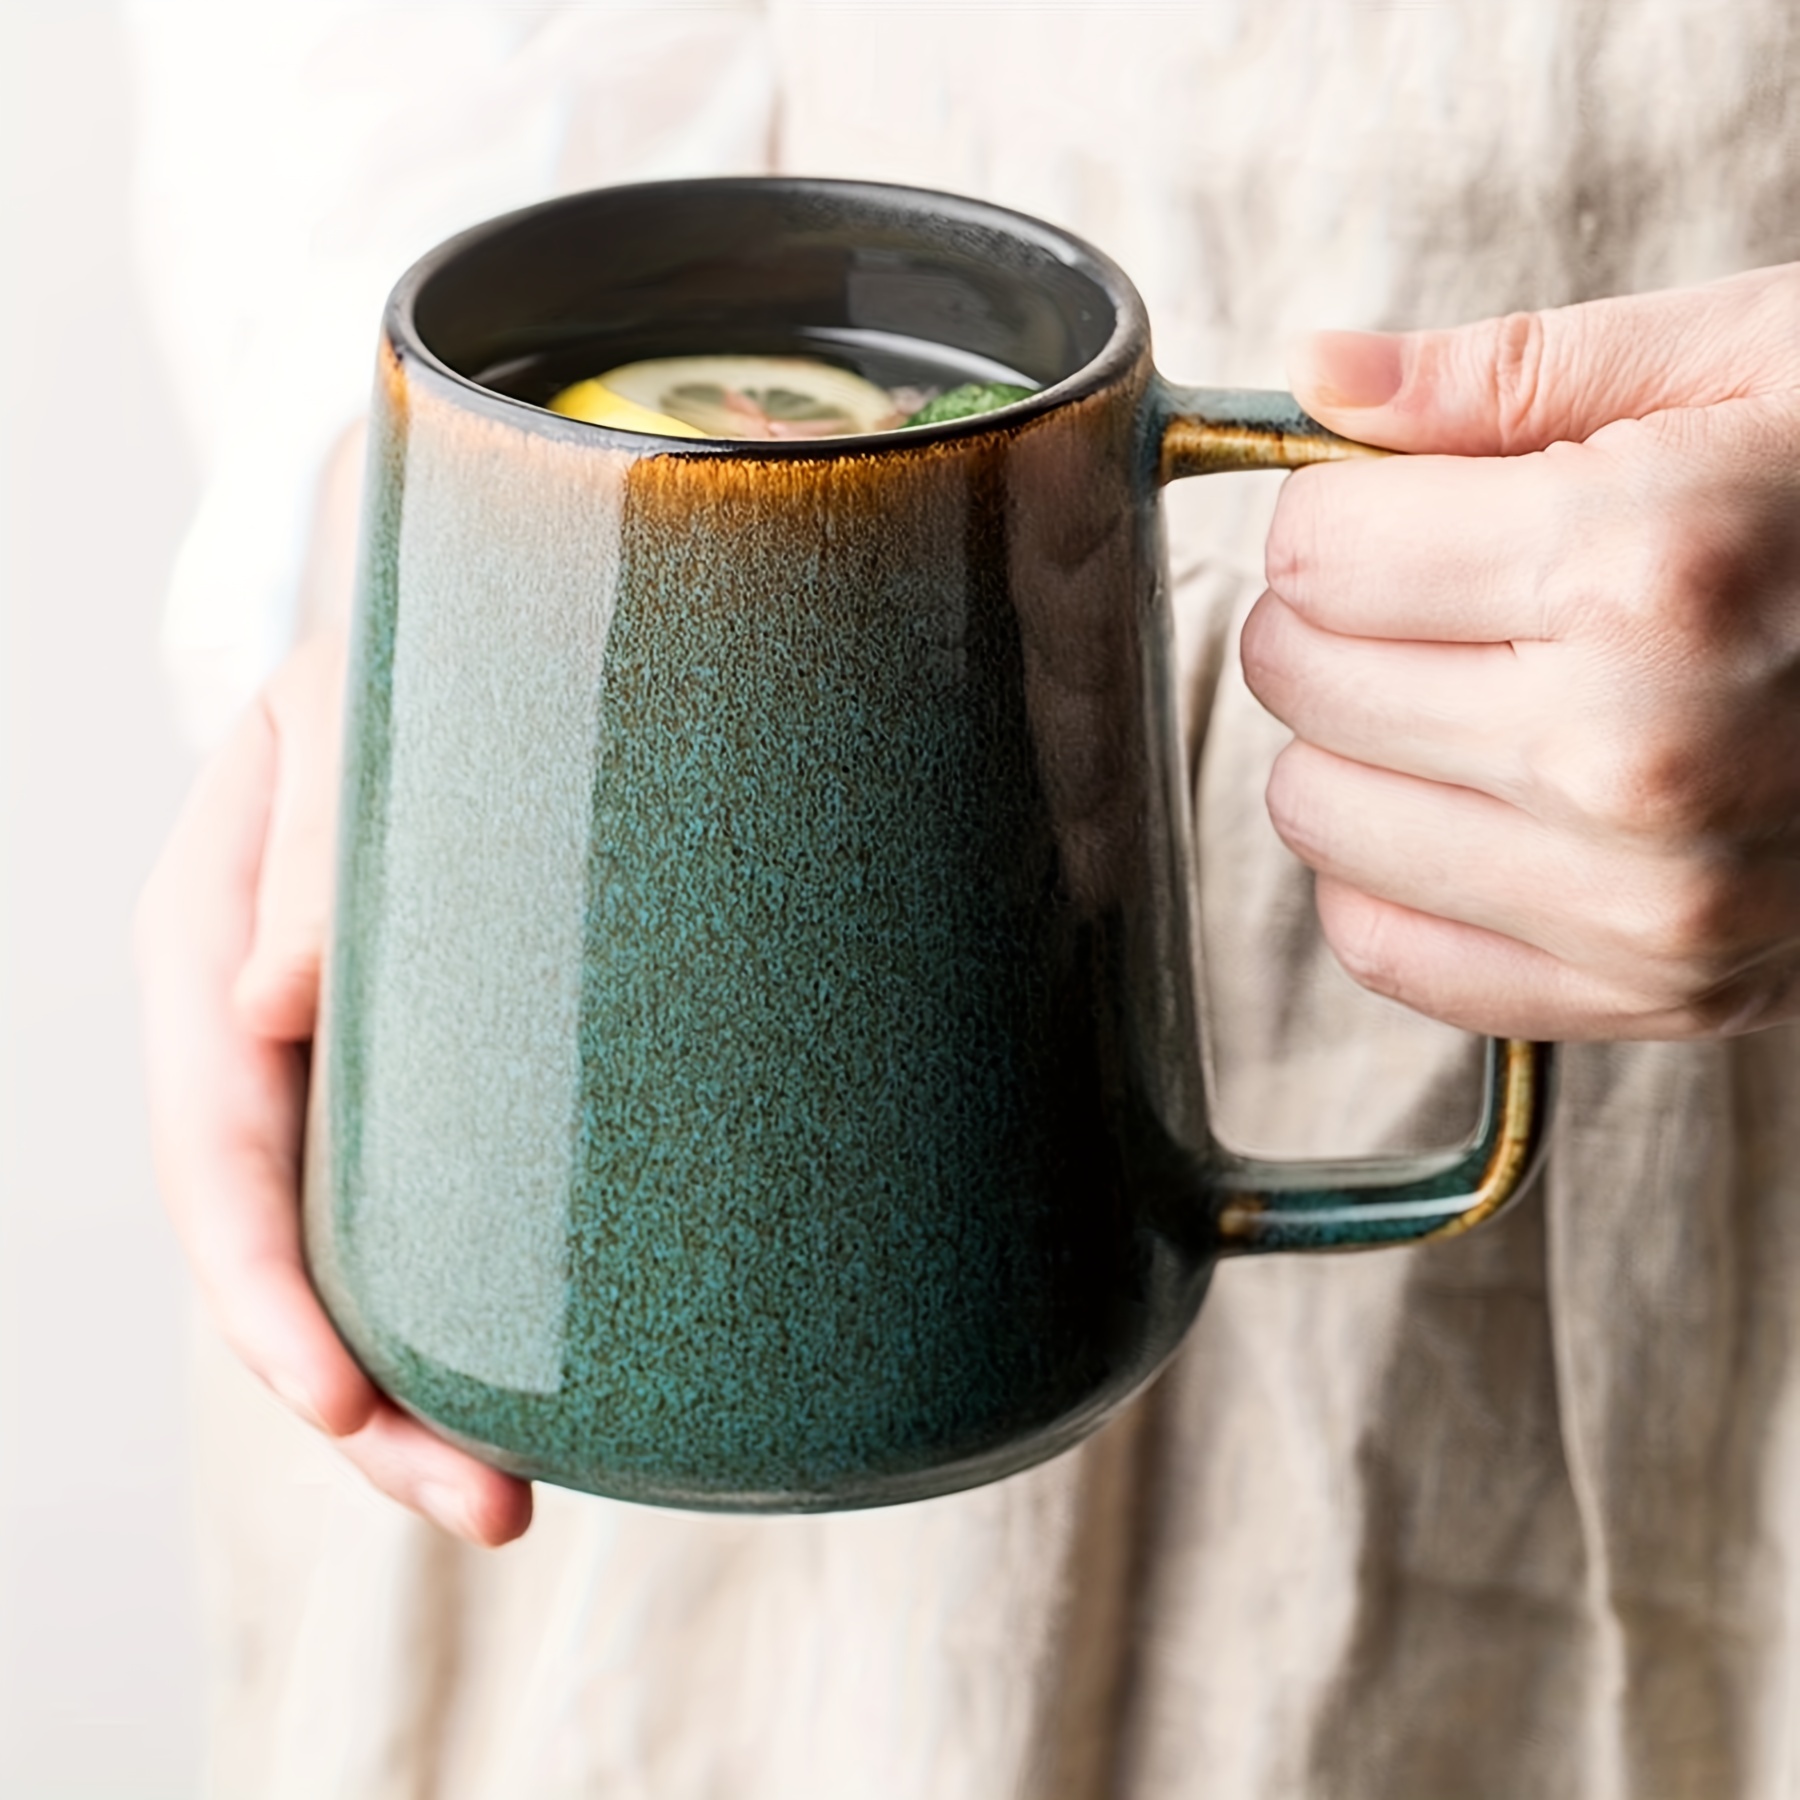 Large Ceramic Coffee Mug - Microwave And Dishwasher Safe - Perfect